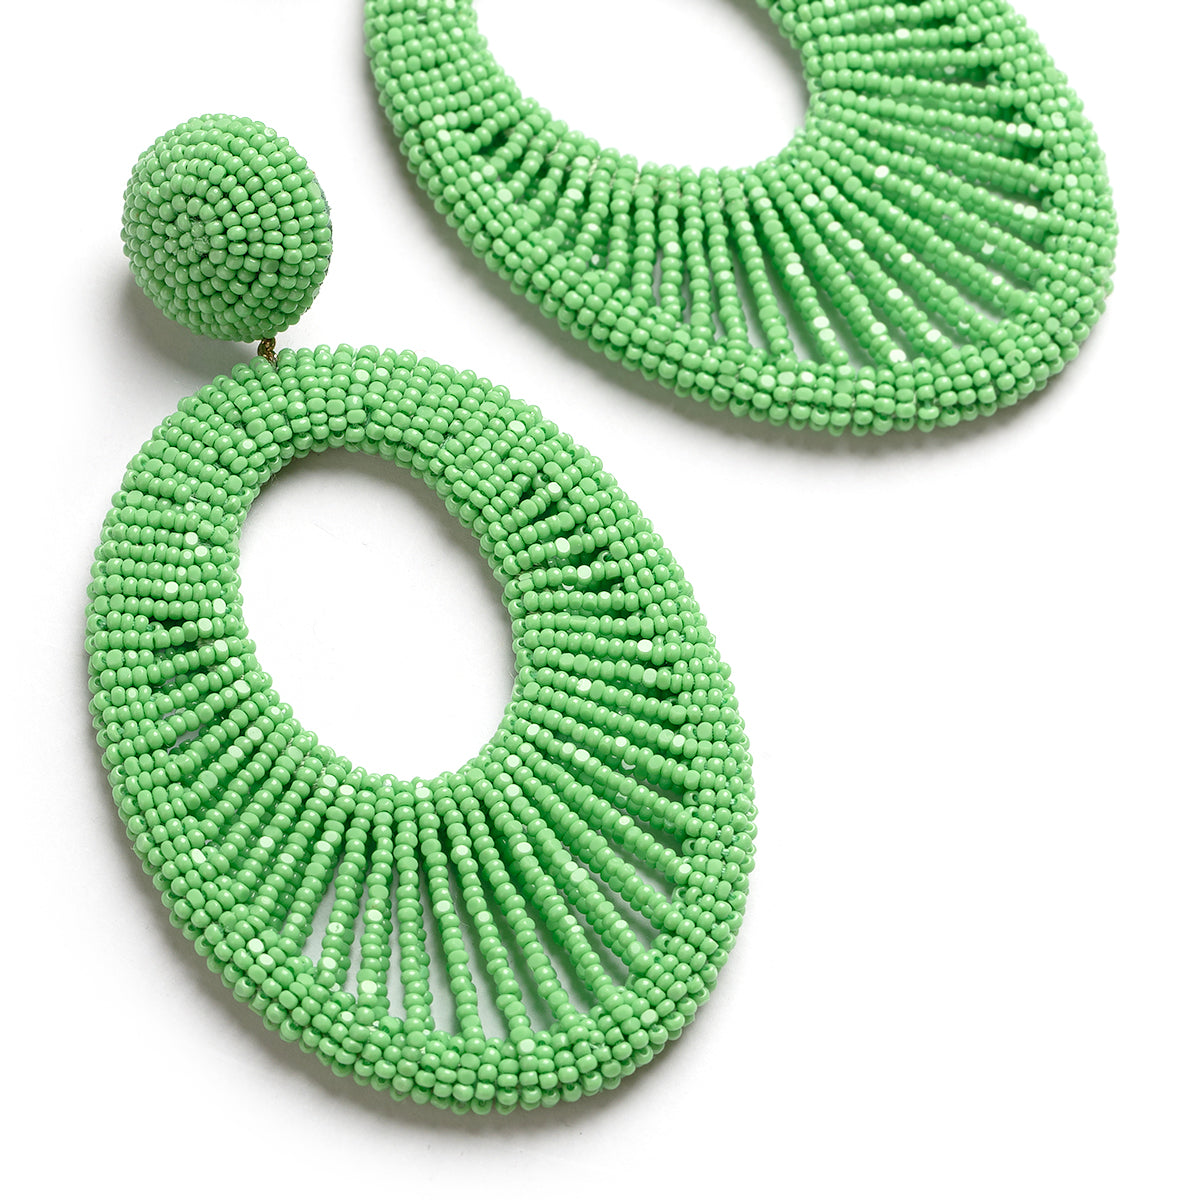 Deepa Gurnani handmade the Cypress earrings in green color